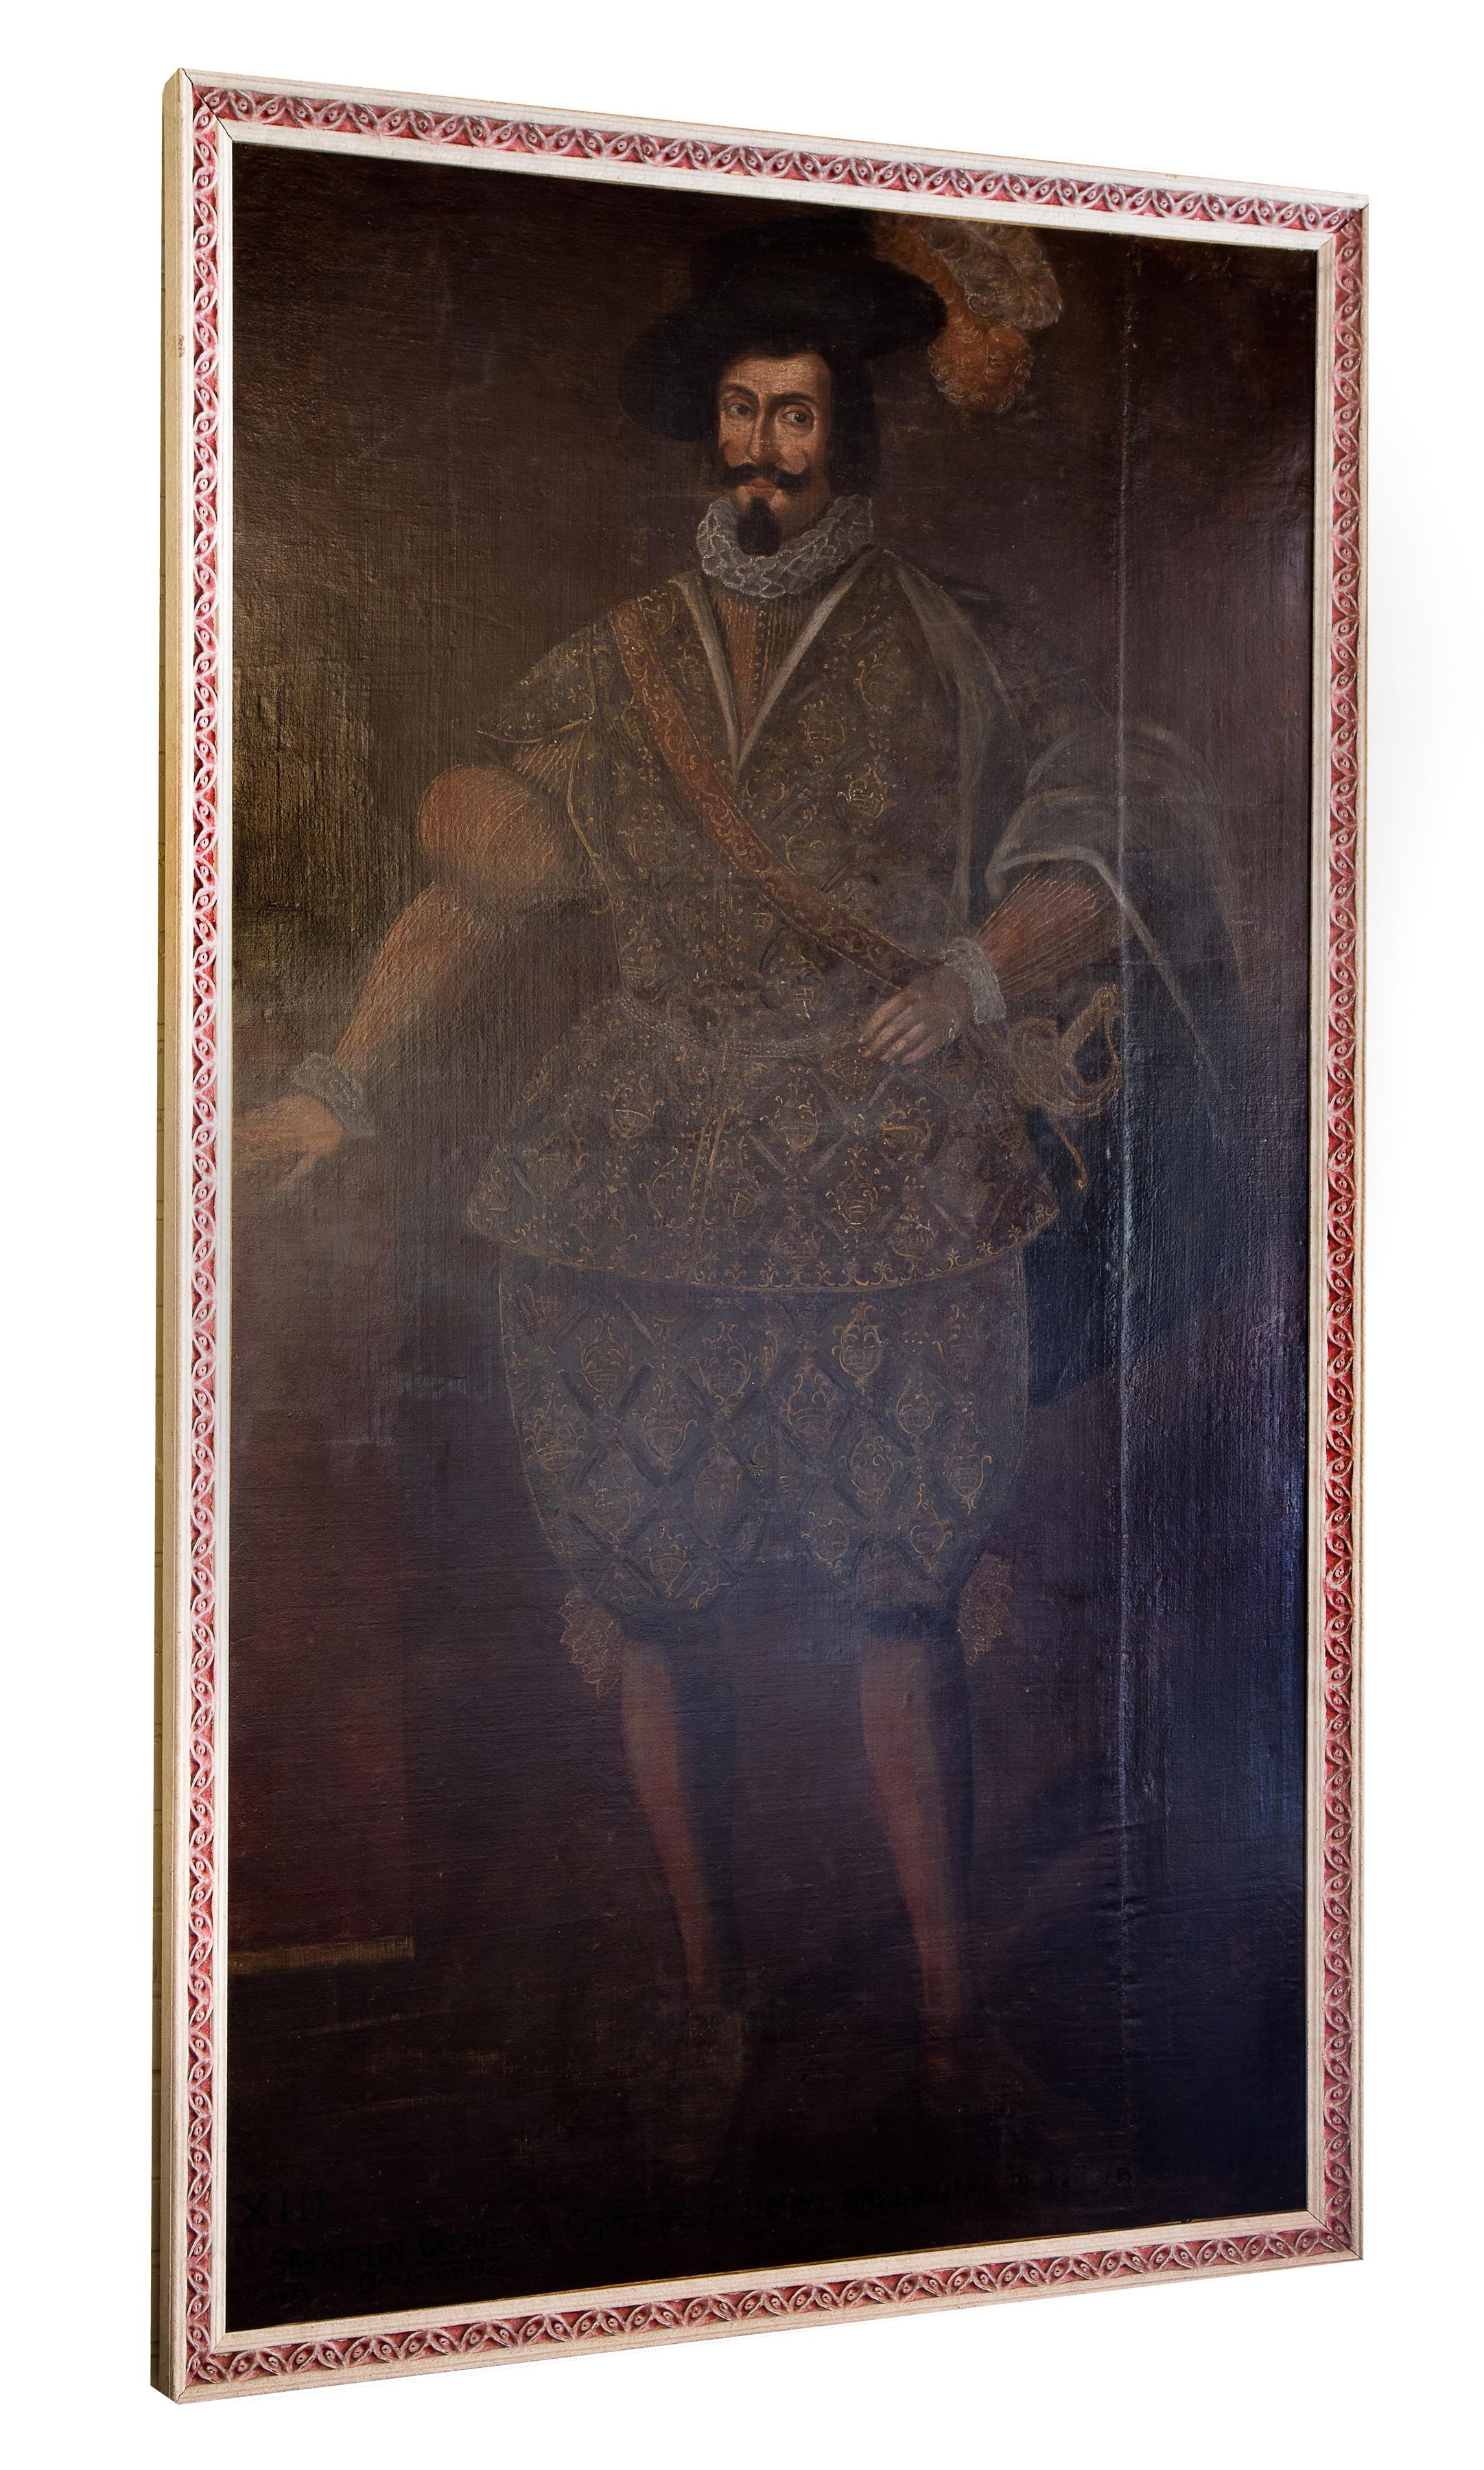 In the manner of Juan van der Hamen, Portrait of a Spanish Nobleman

Bearing the inscription:  -Serafín Carroz de Centelles, el liberal hijo legítimo de Don Luís Centelles y Doña Toda Carroz

Notes - Serafín Carroz de Centelles (d. 1557), Conde de